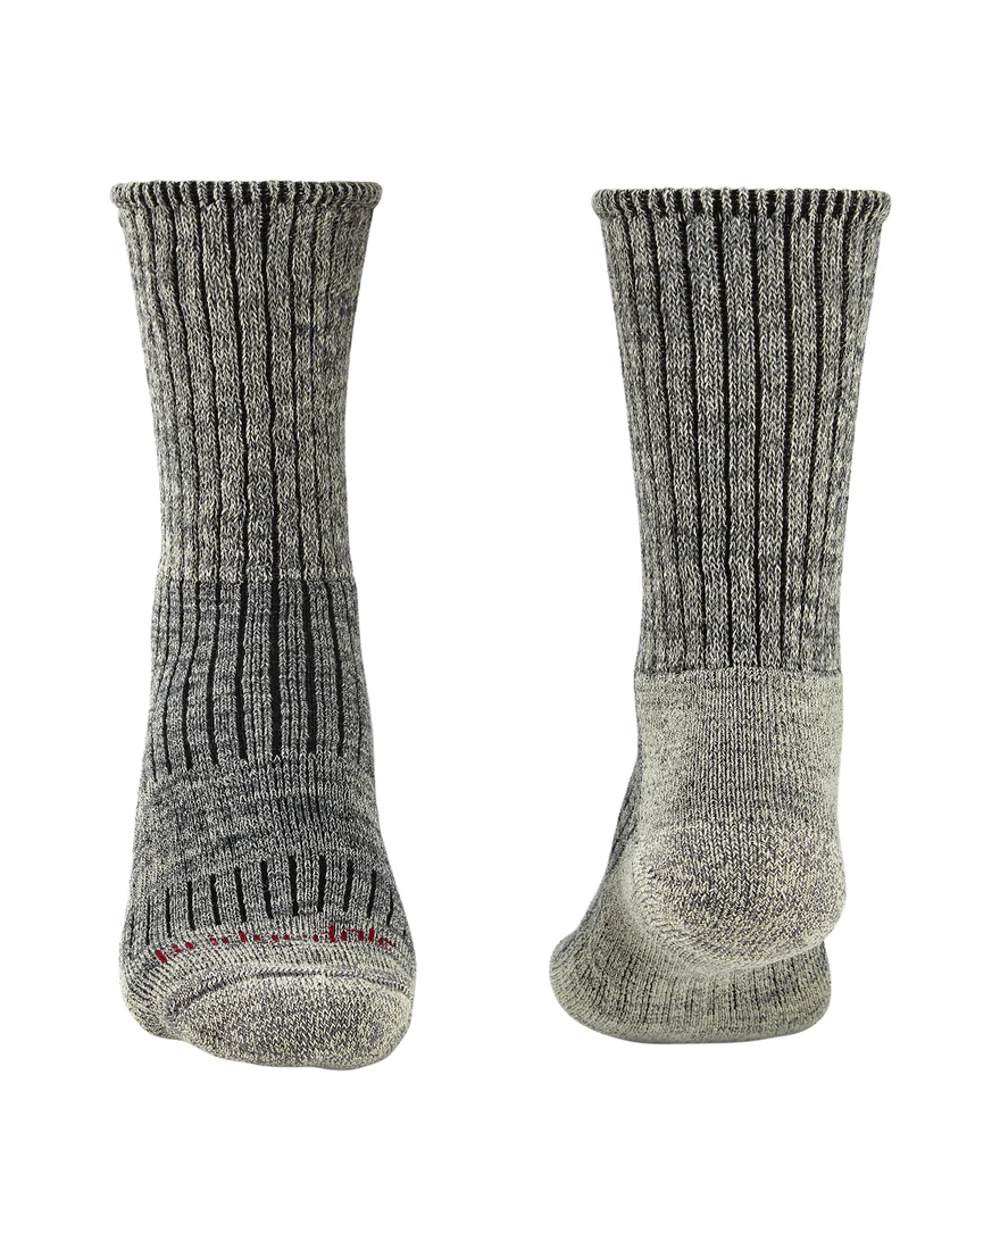 Stone Grey coloured Bridgedale Hike Midweight Merino Comfort Socks on a white background 